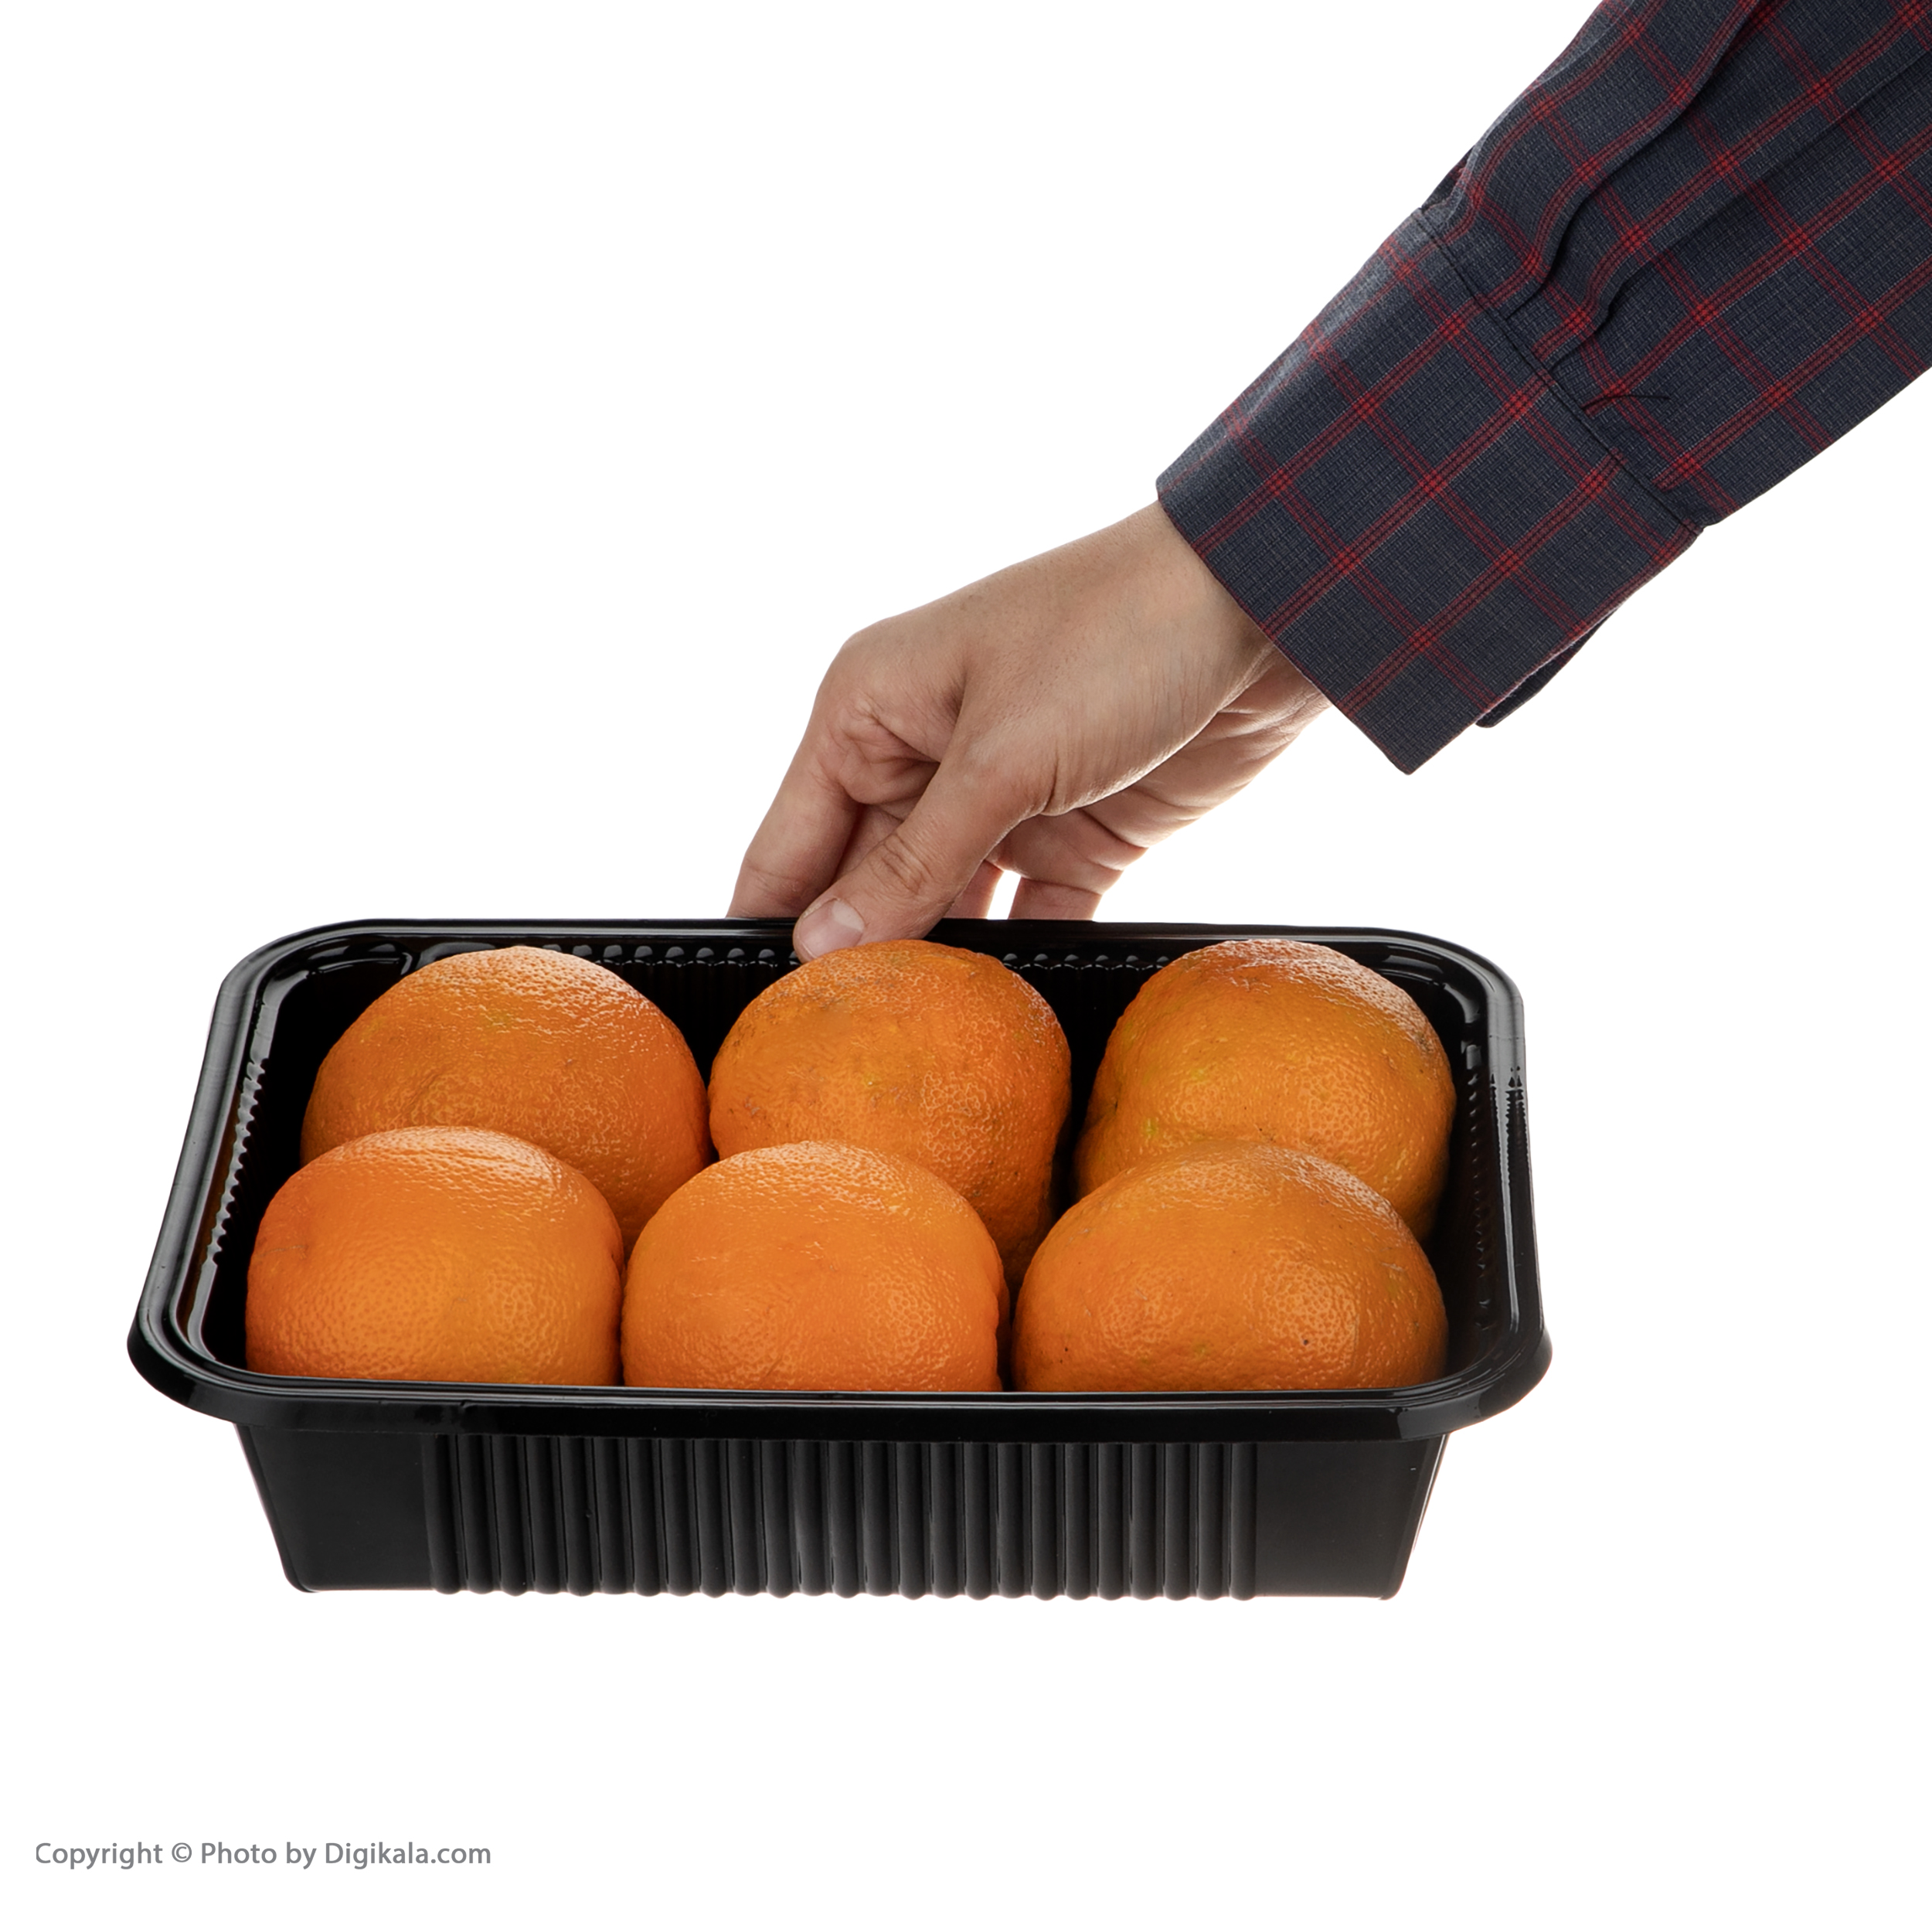 نارنج میوری - 1 کیلوگرم 